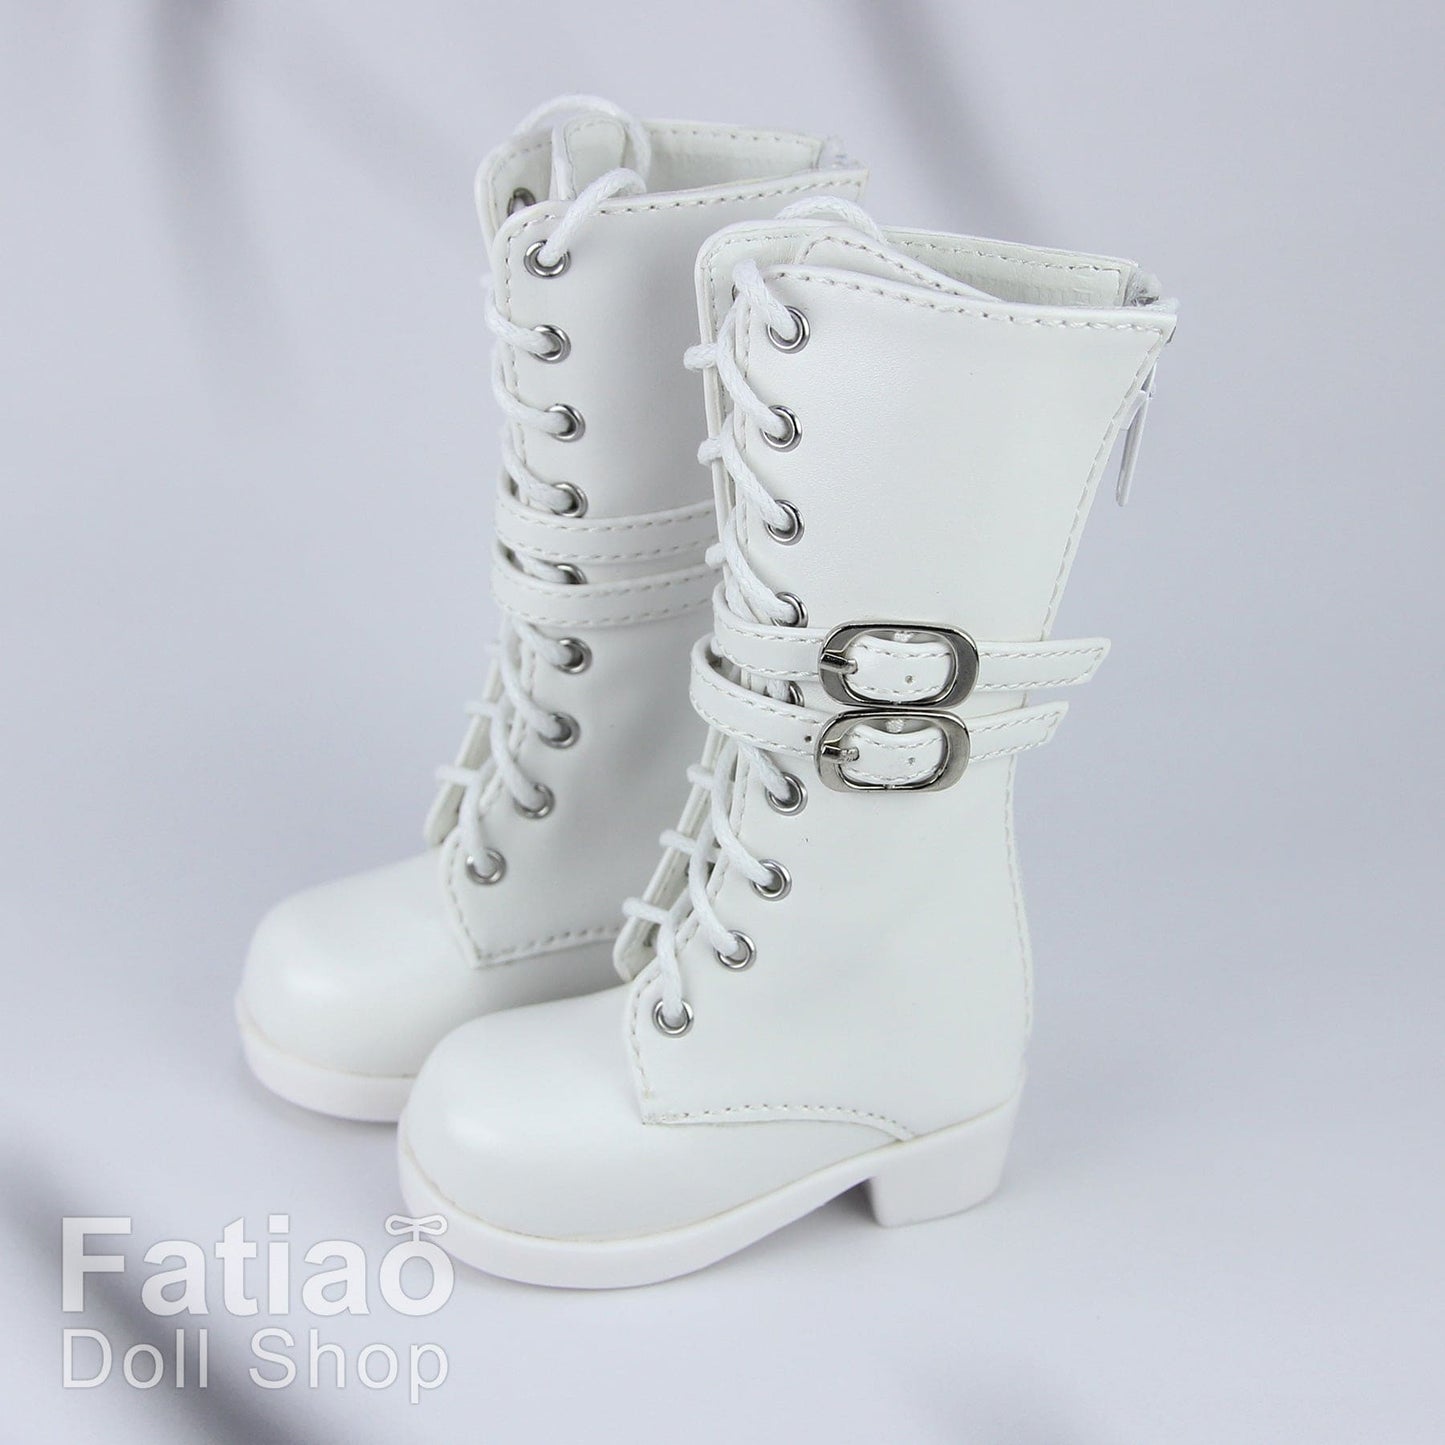 【Fatiao Doll Shop】Loop Boots C33 Multicolor / BJD SD10 SD13 DD 1/3 scale 